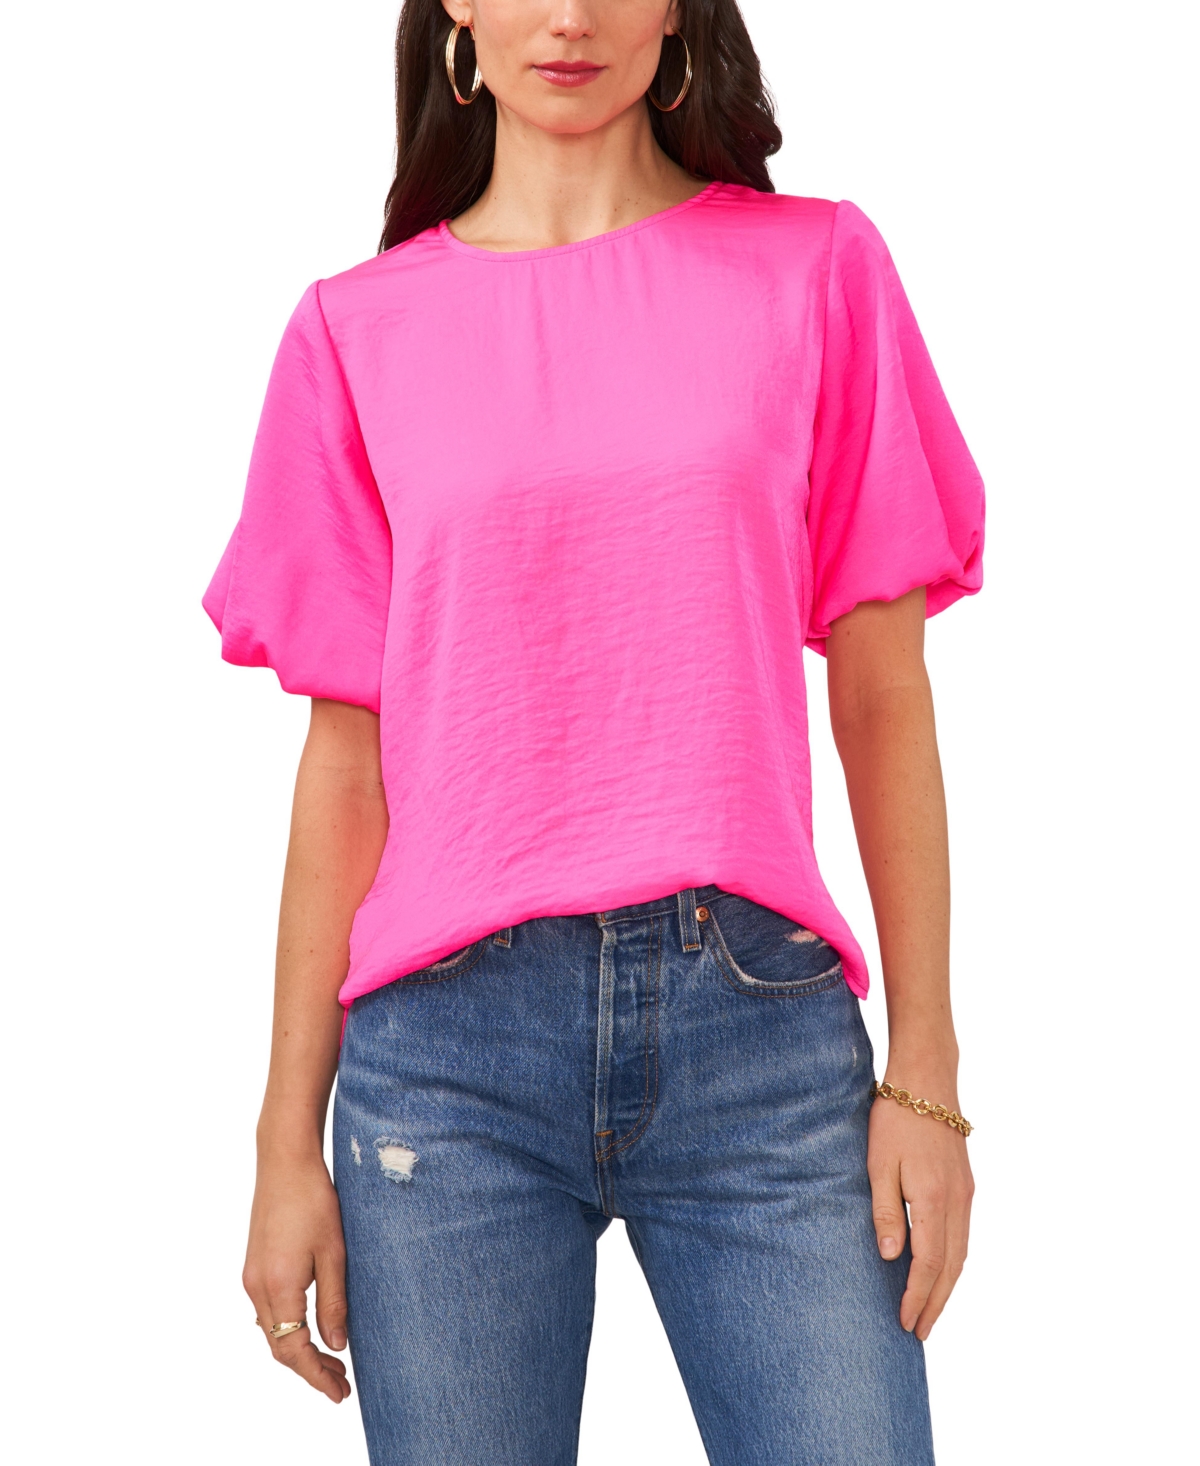 Women's Crewneck Puff Sleeve Blouse - Hot Pink